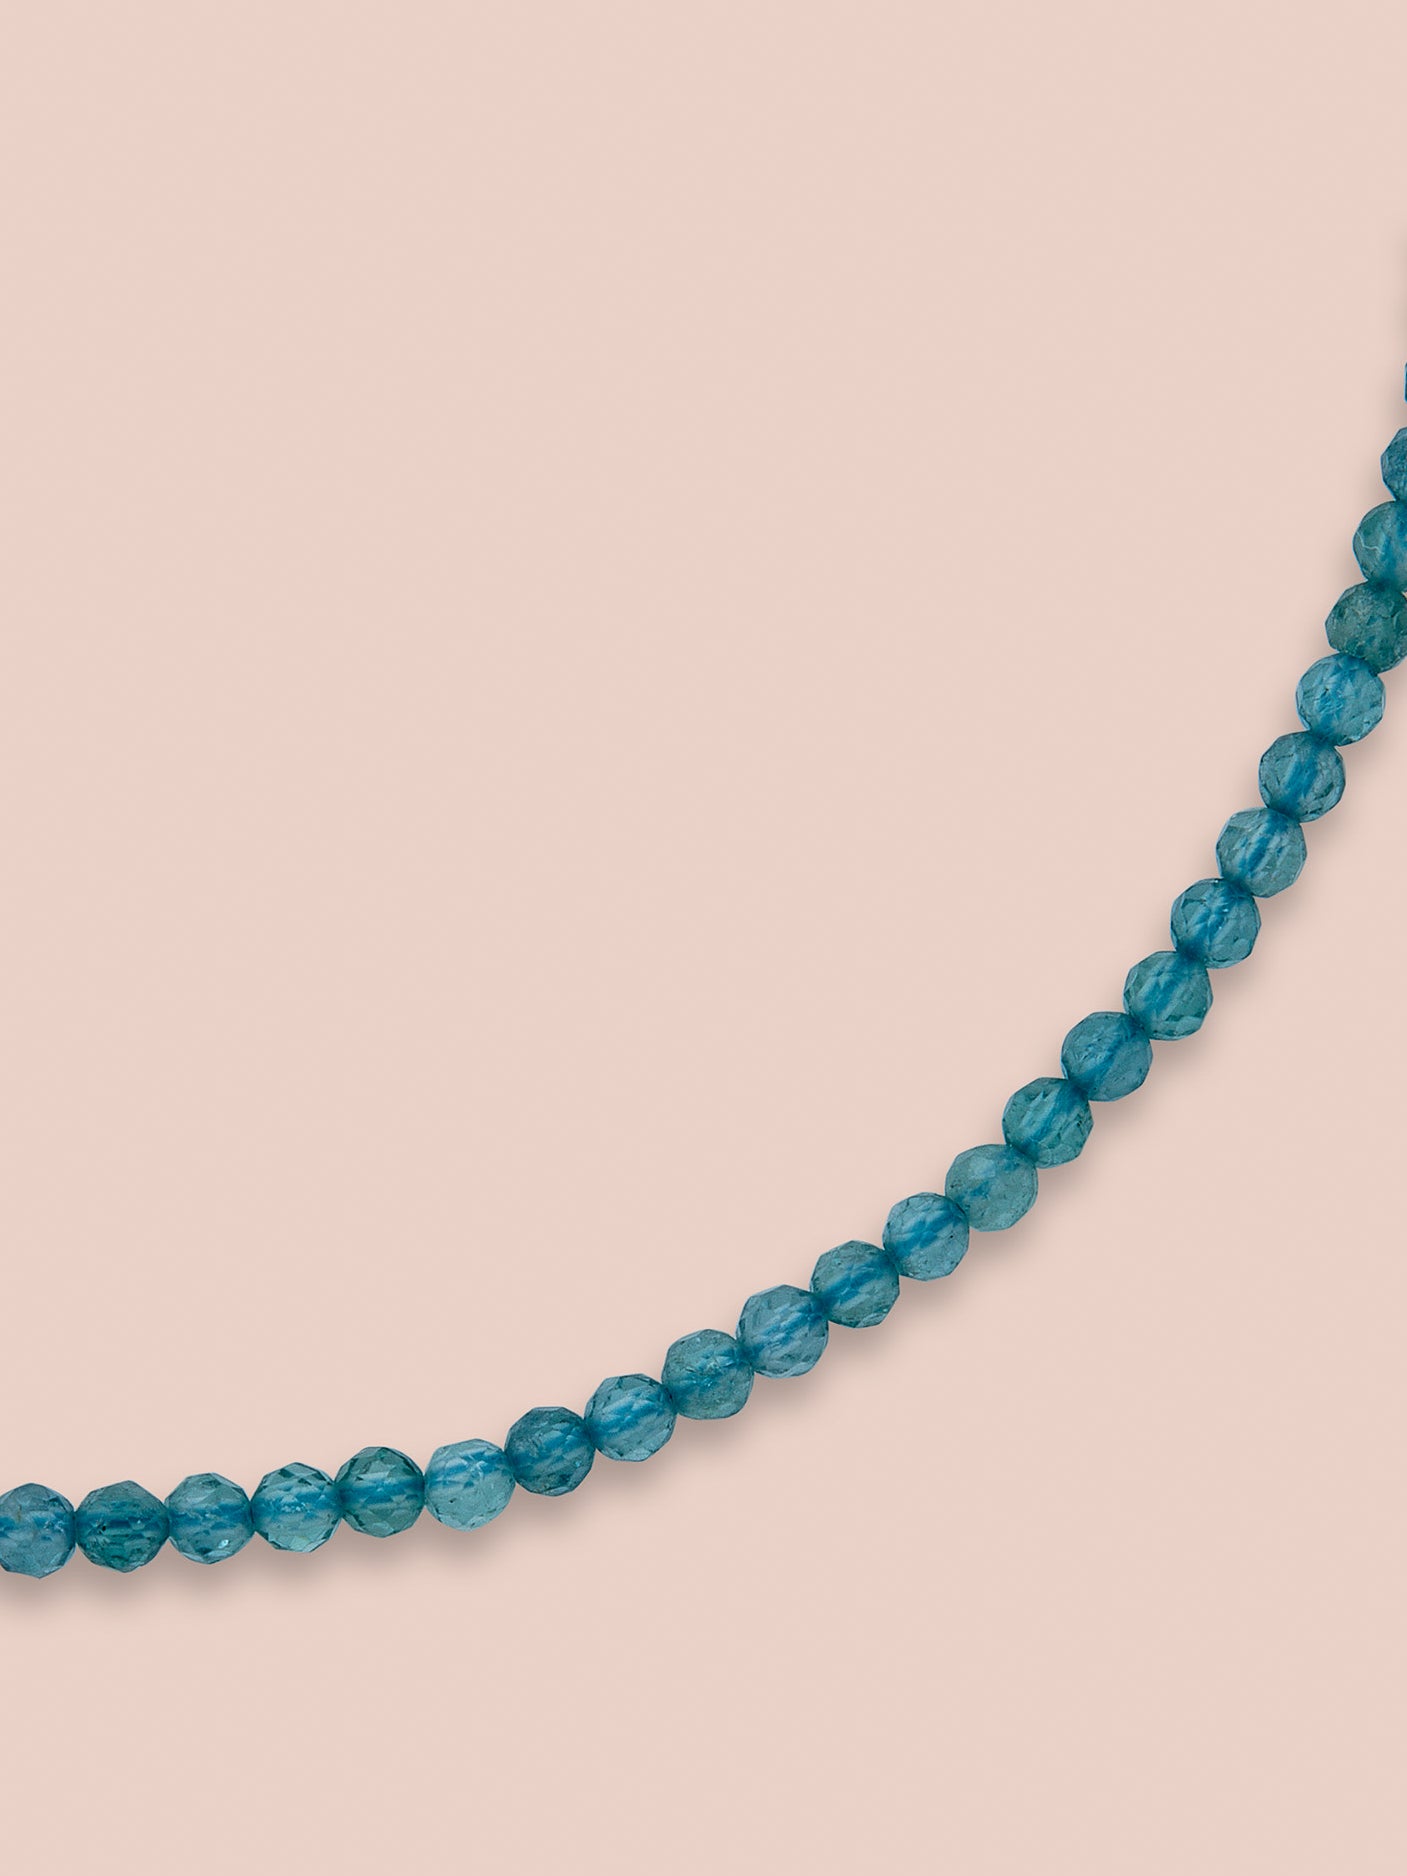 Tiny Beaded Necklace | Von Bargen's Jewelry